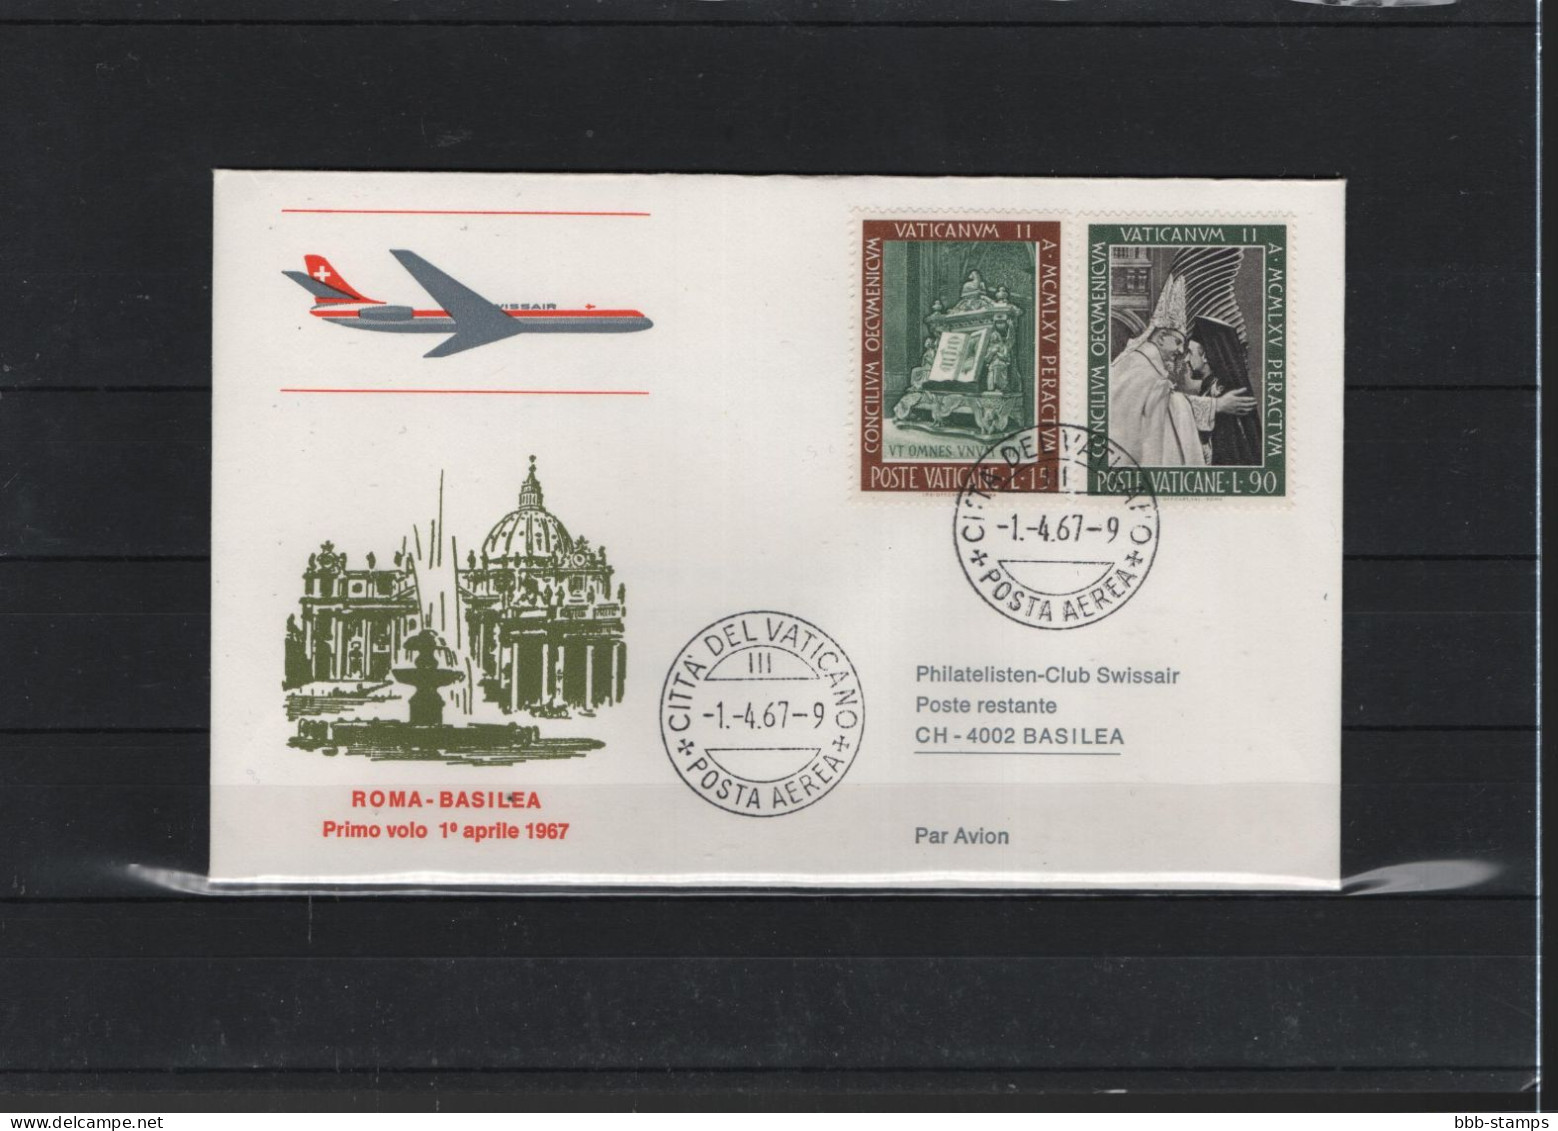 Schweiz Air Mail Swissair  FFC  1.4..1967 Basel - Rom VV - Primi Voli